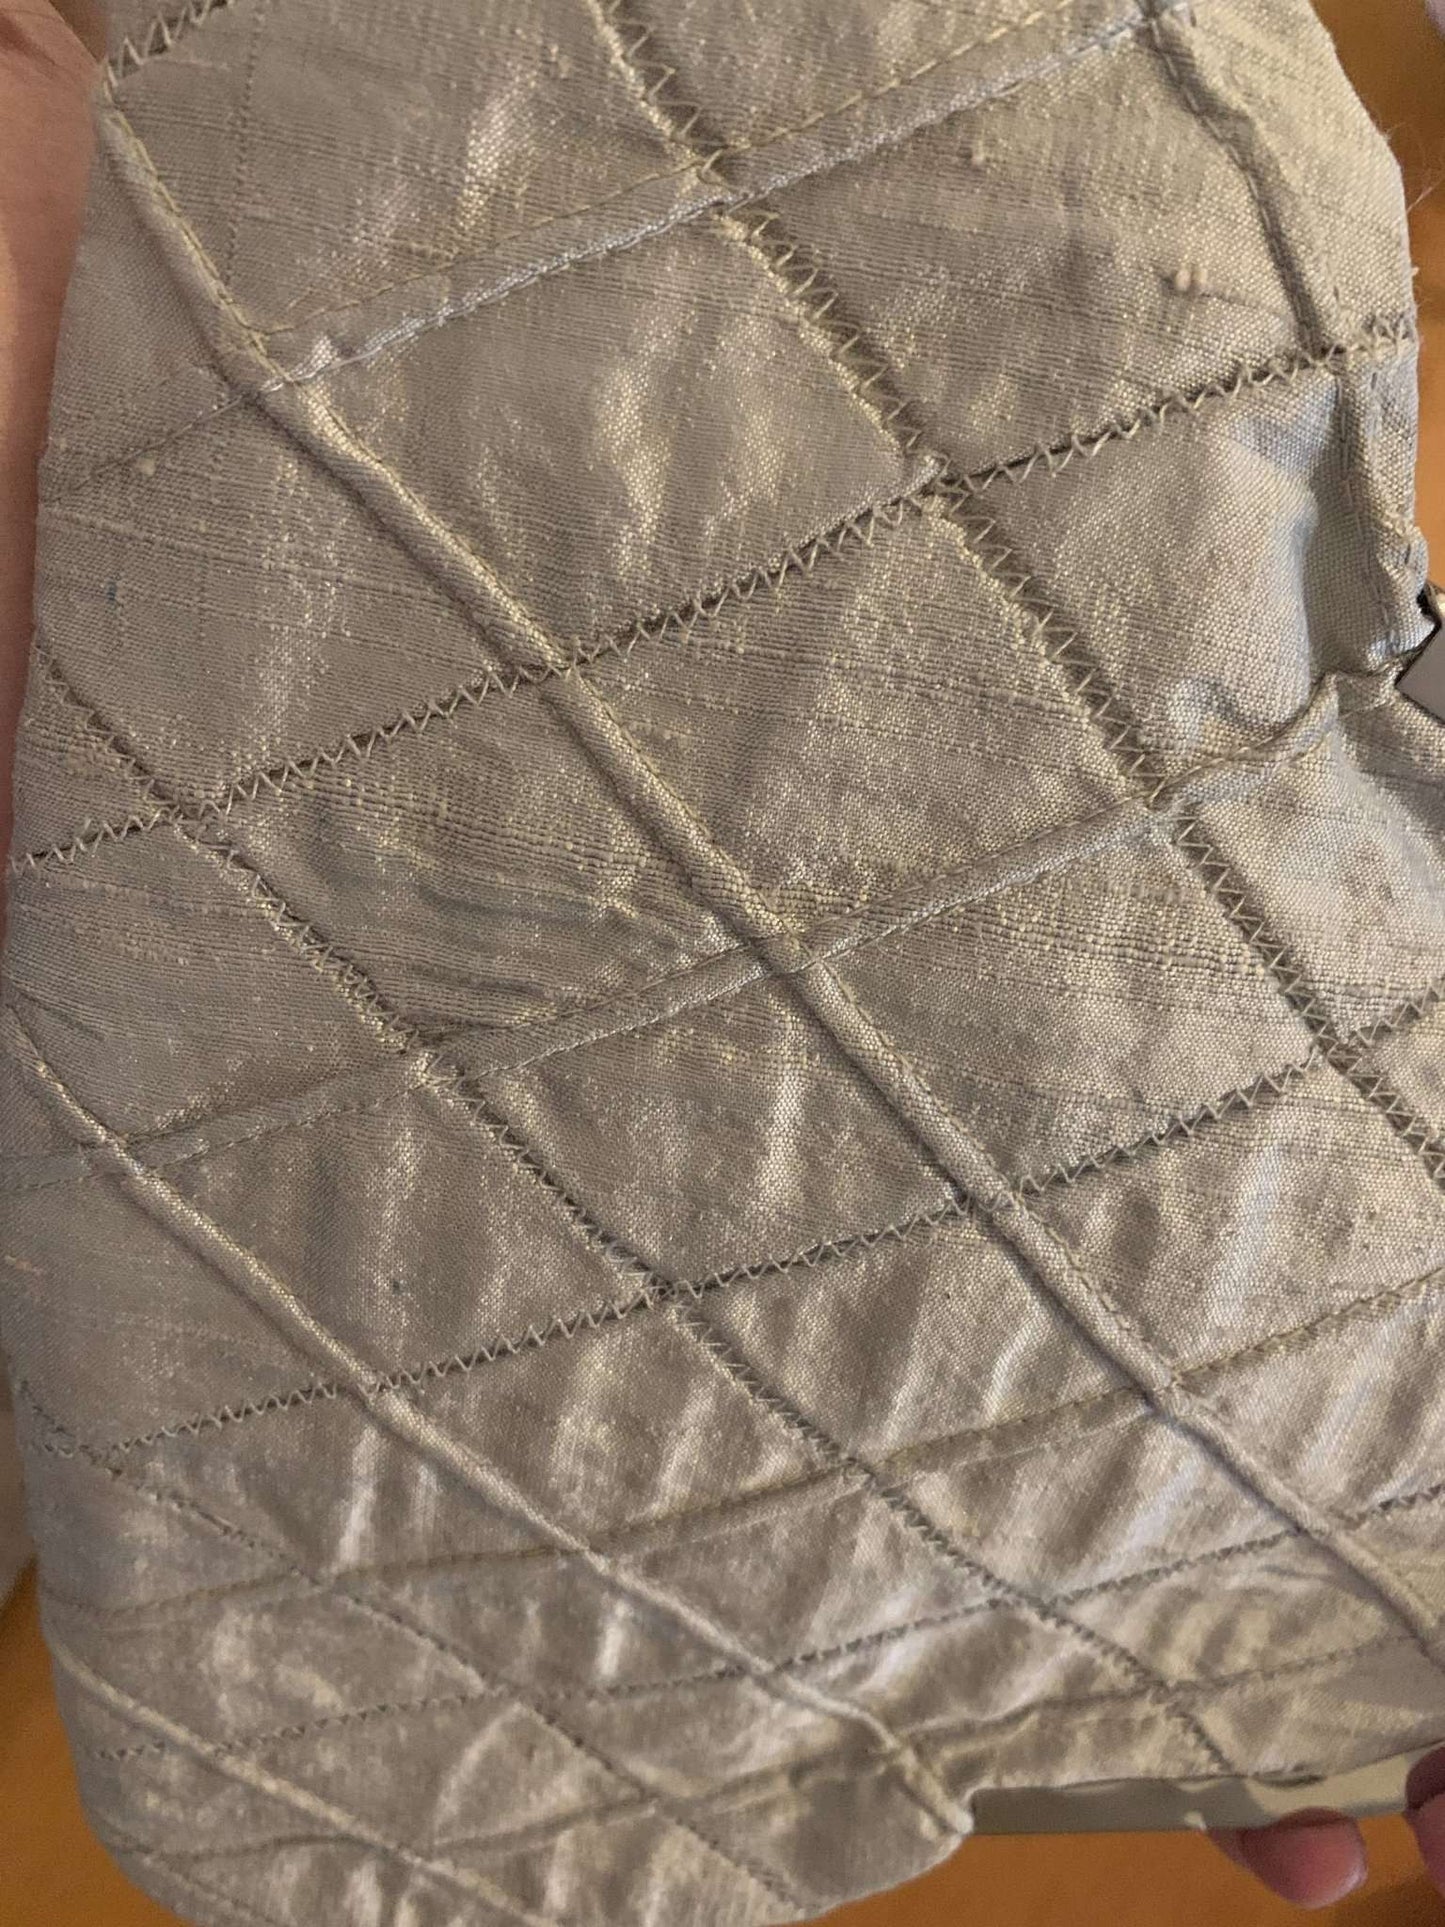 30s handbag 1930’s Frame bag Purse Bronze Quirky silver purse clutch Pretty Vintage Boutique